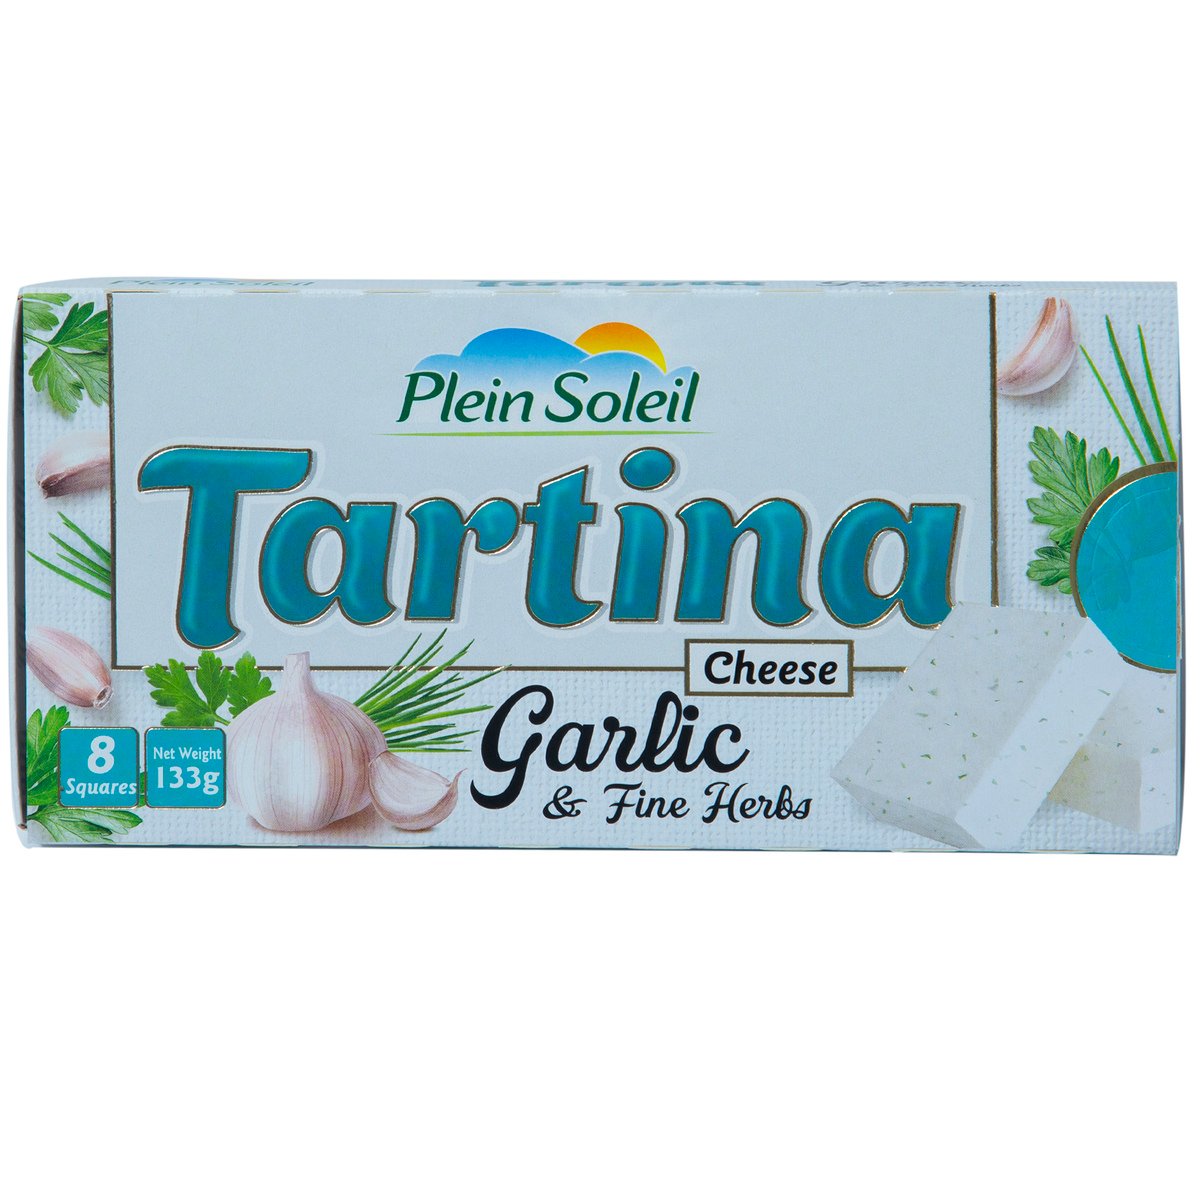 Plein Soleil Tartina Garlic & Fine Herbs Portion Cheese 8 pcs